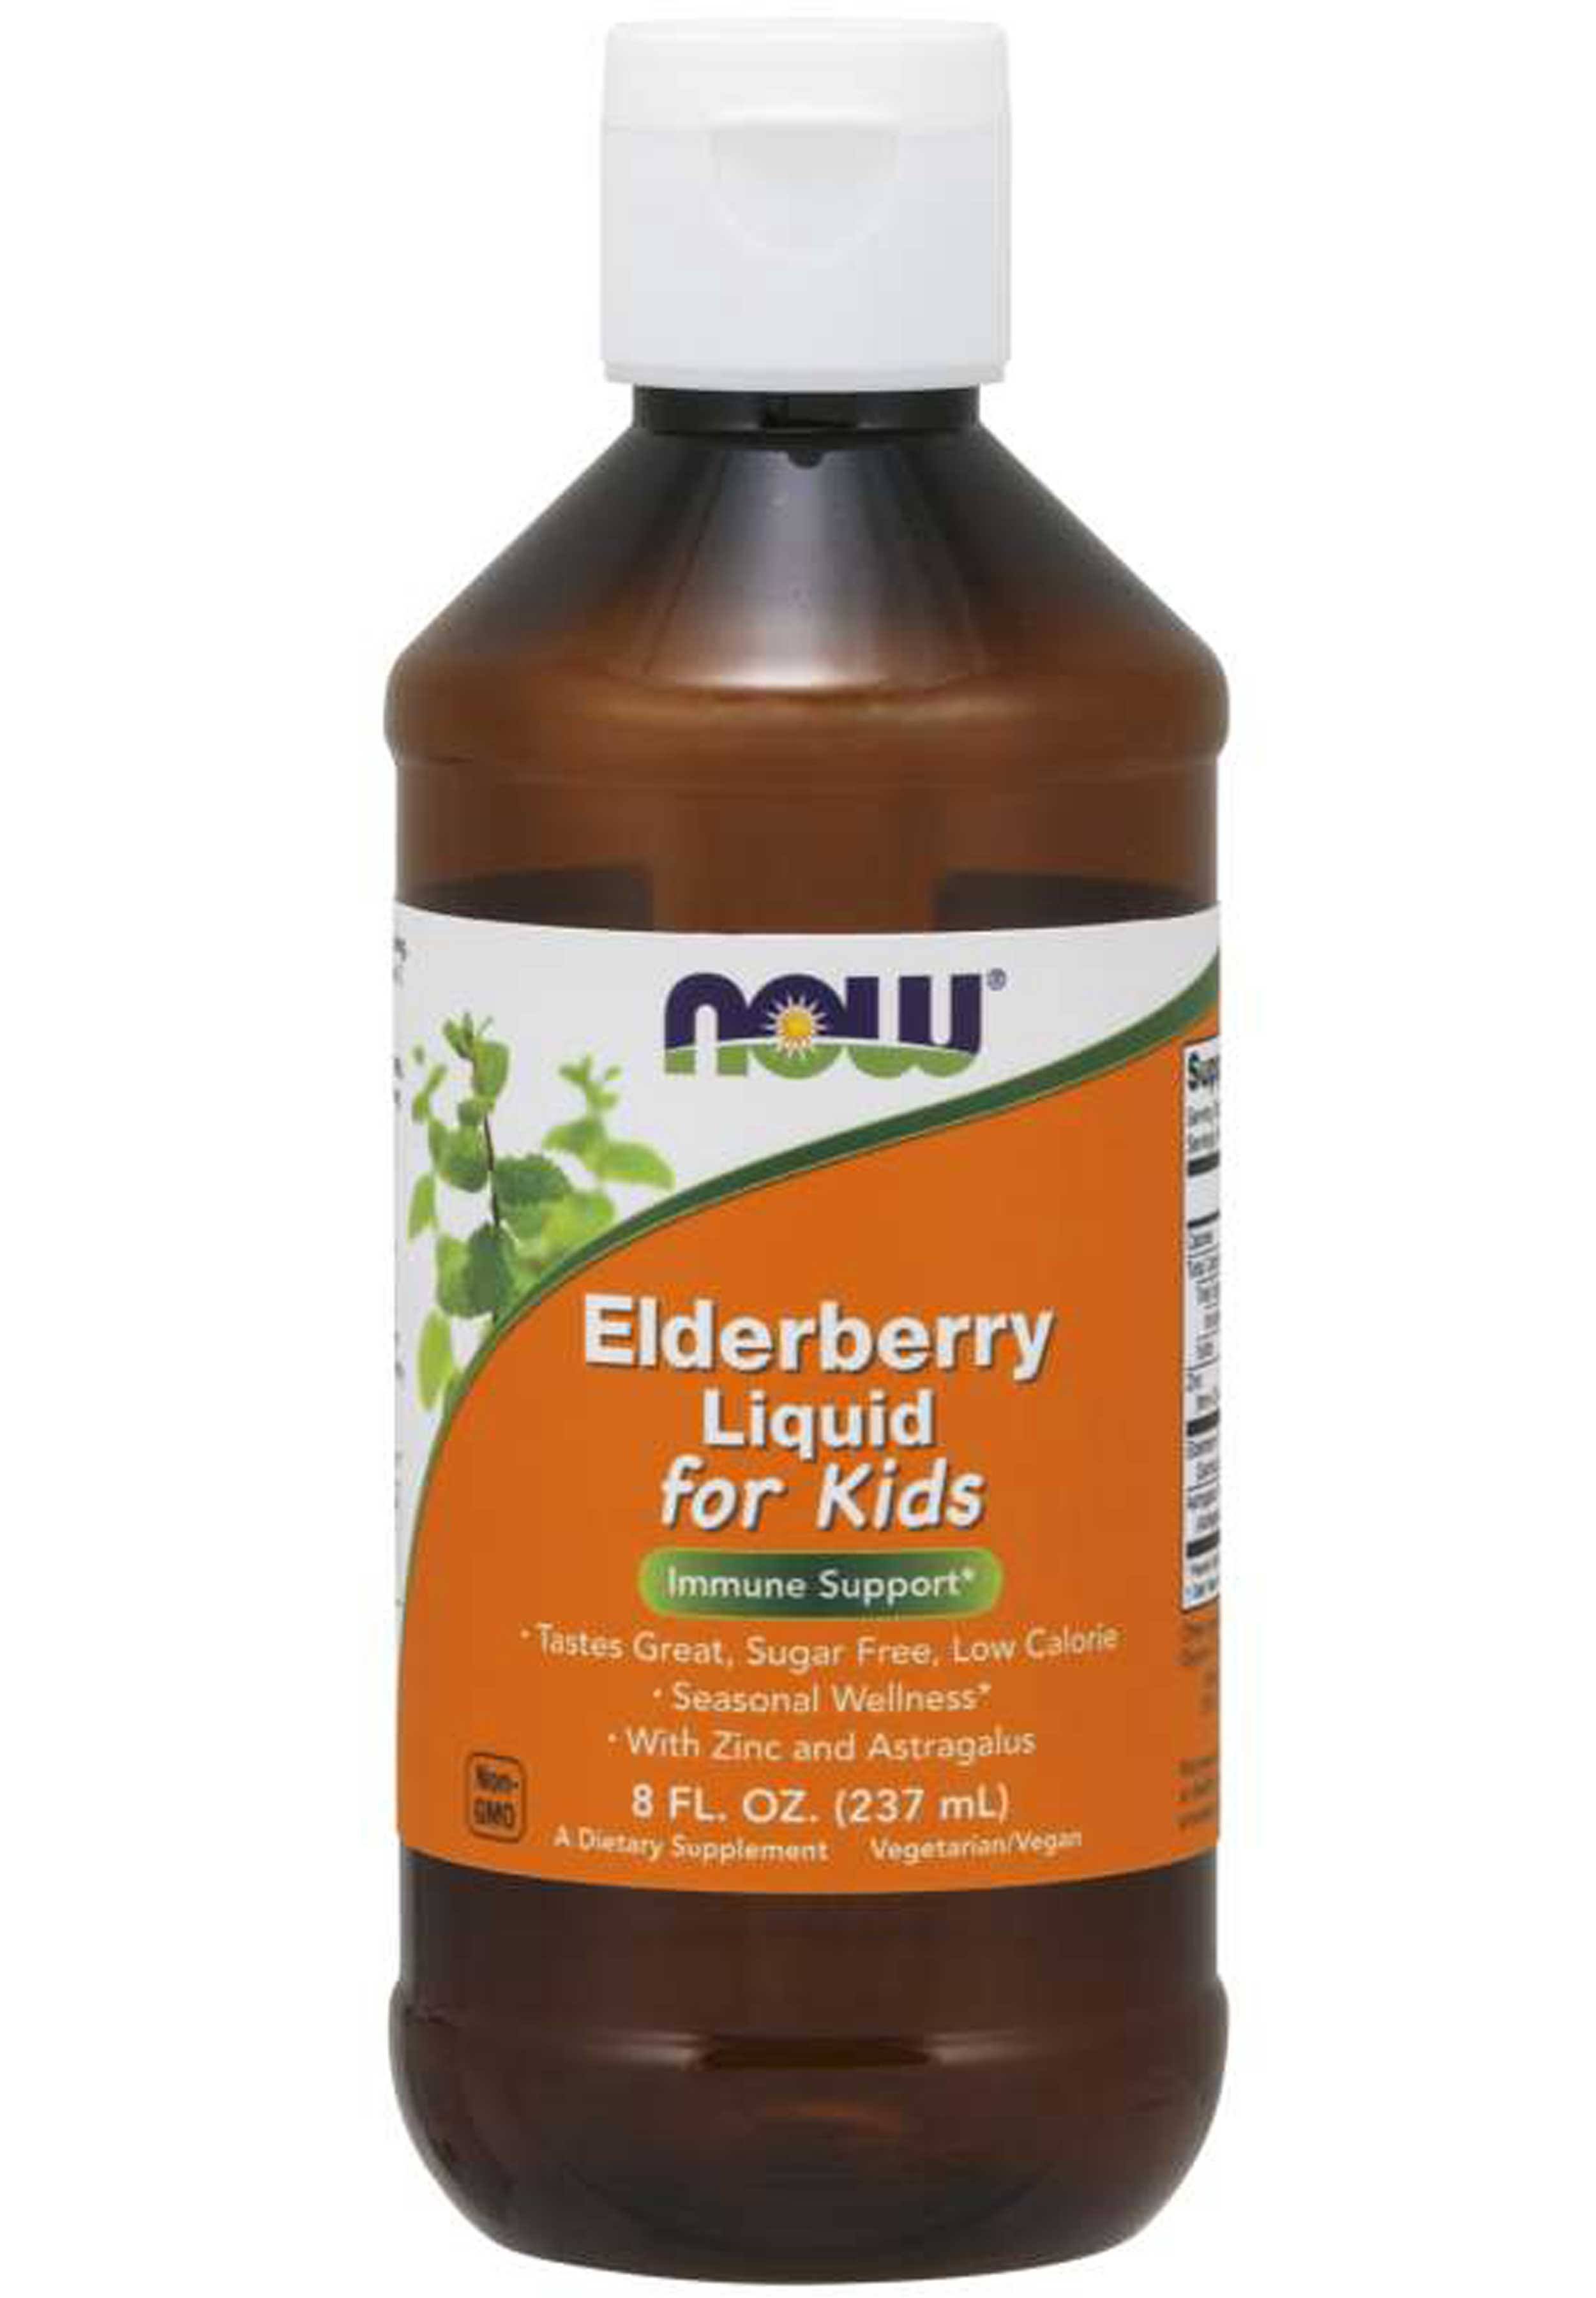 Now Elderberry Liquid for Kids - 8 fl oz